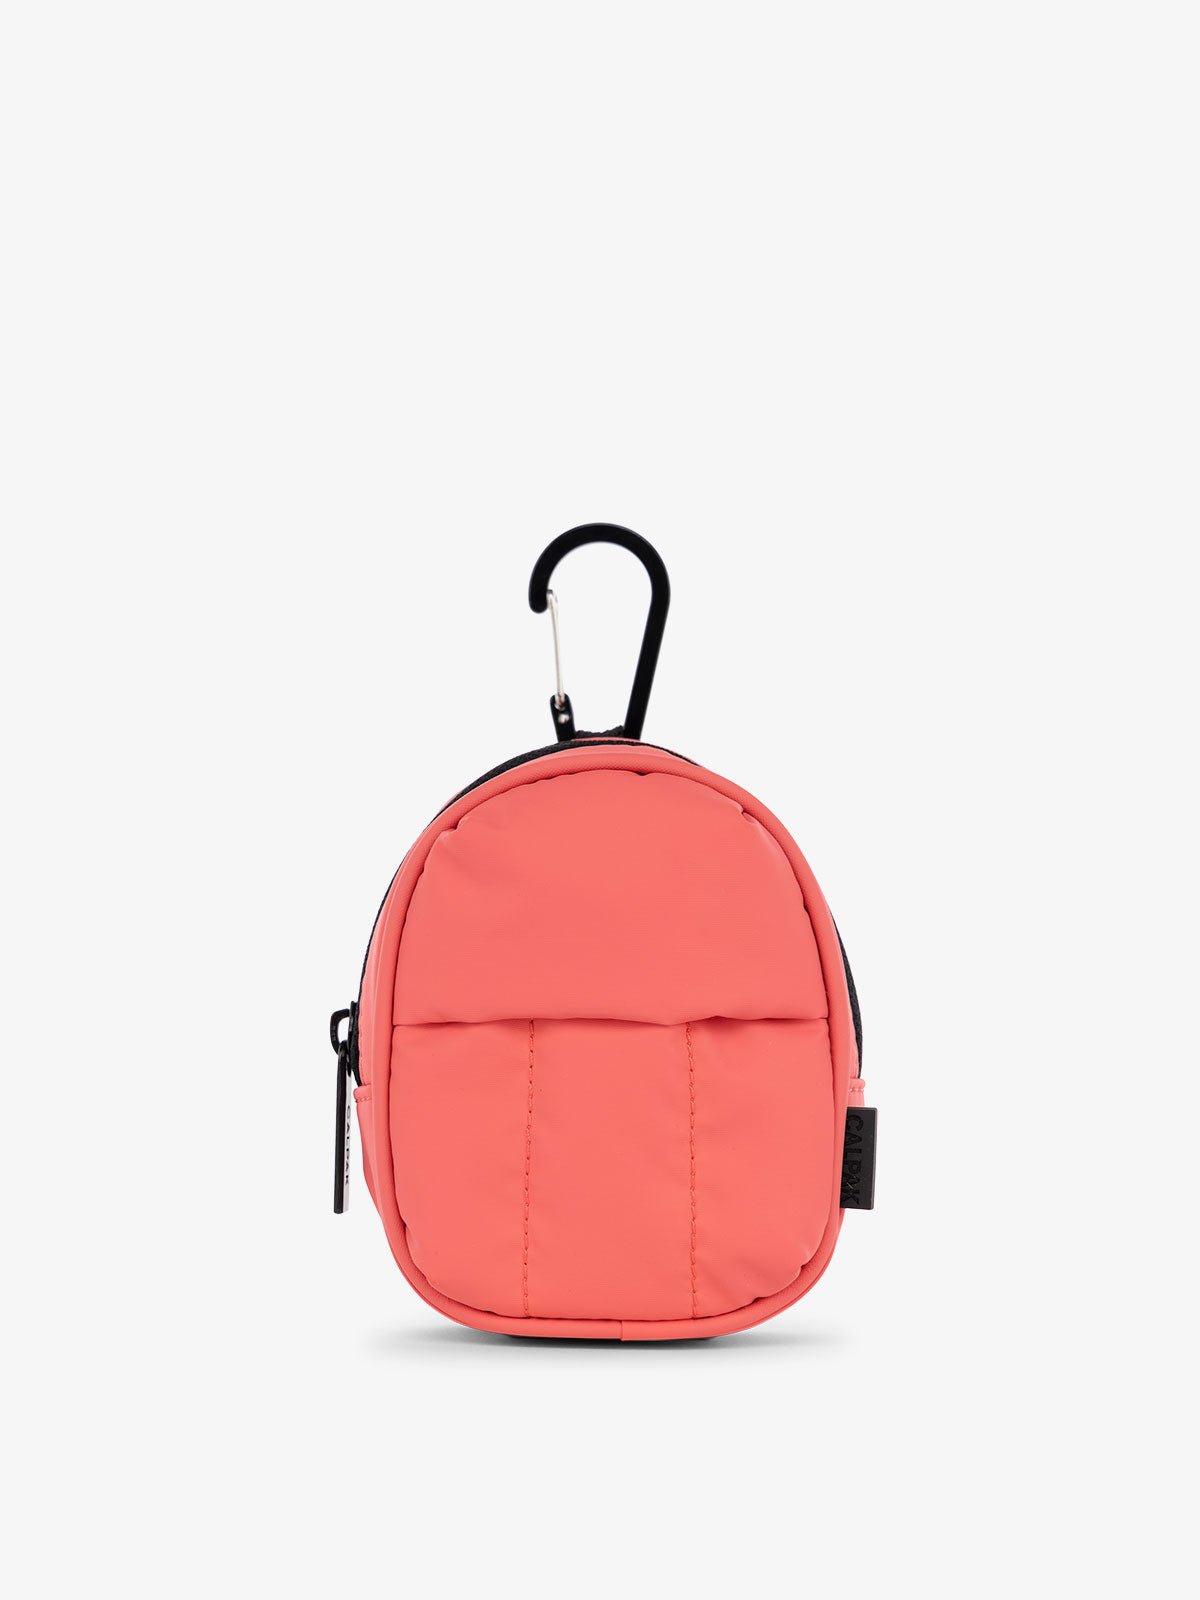 CALPAK Luka key pouch with carabiner clip in watermelon